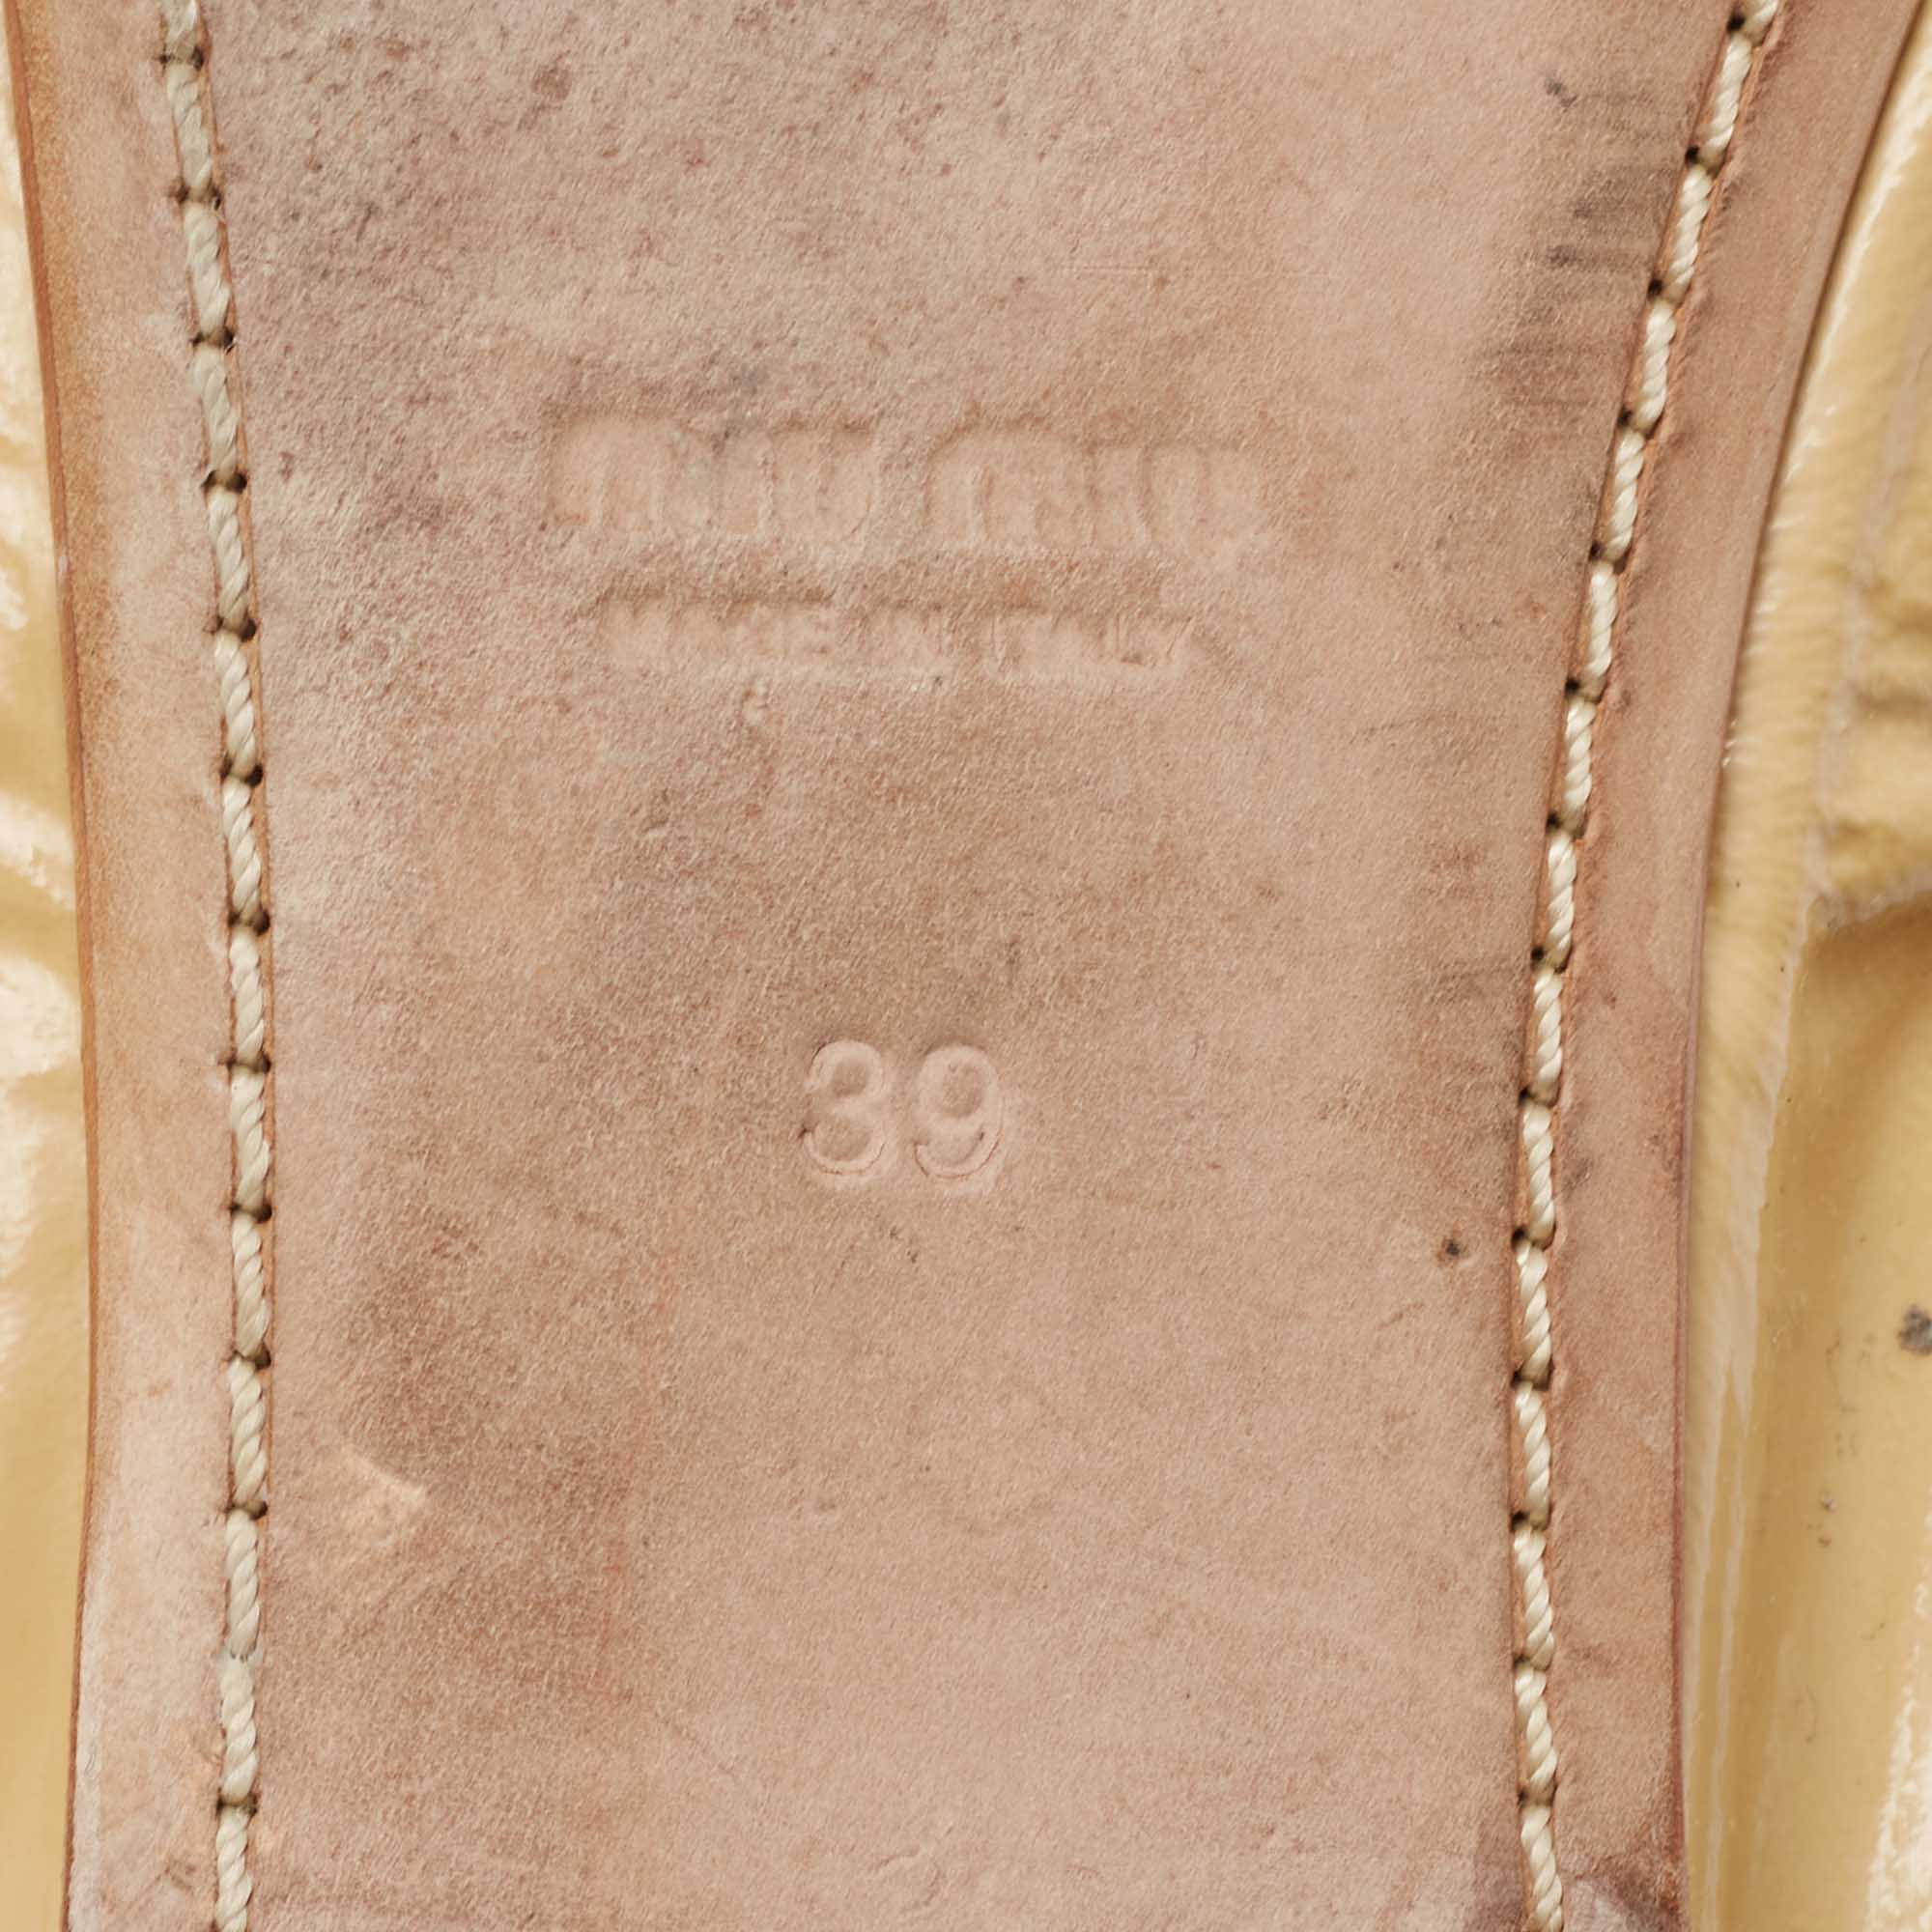 Miu Miu Beige Patent Leather Crystal Embellished Ballet Flats Size 39